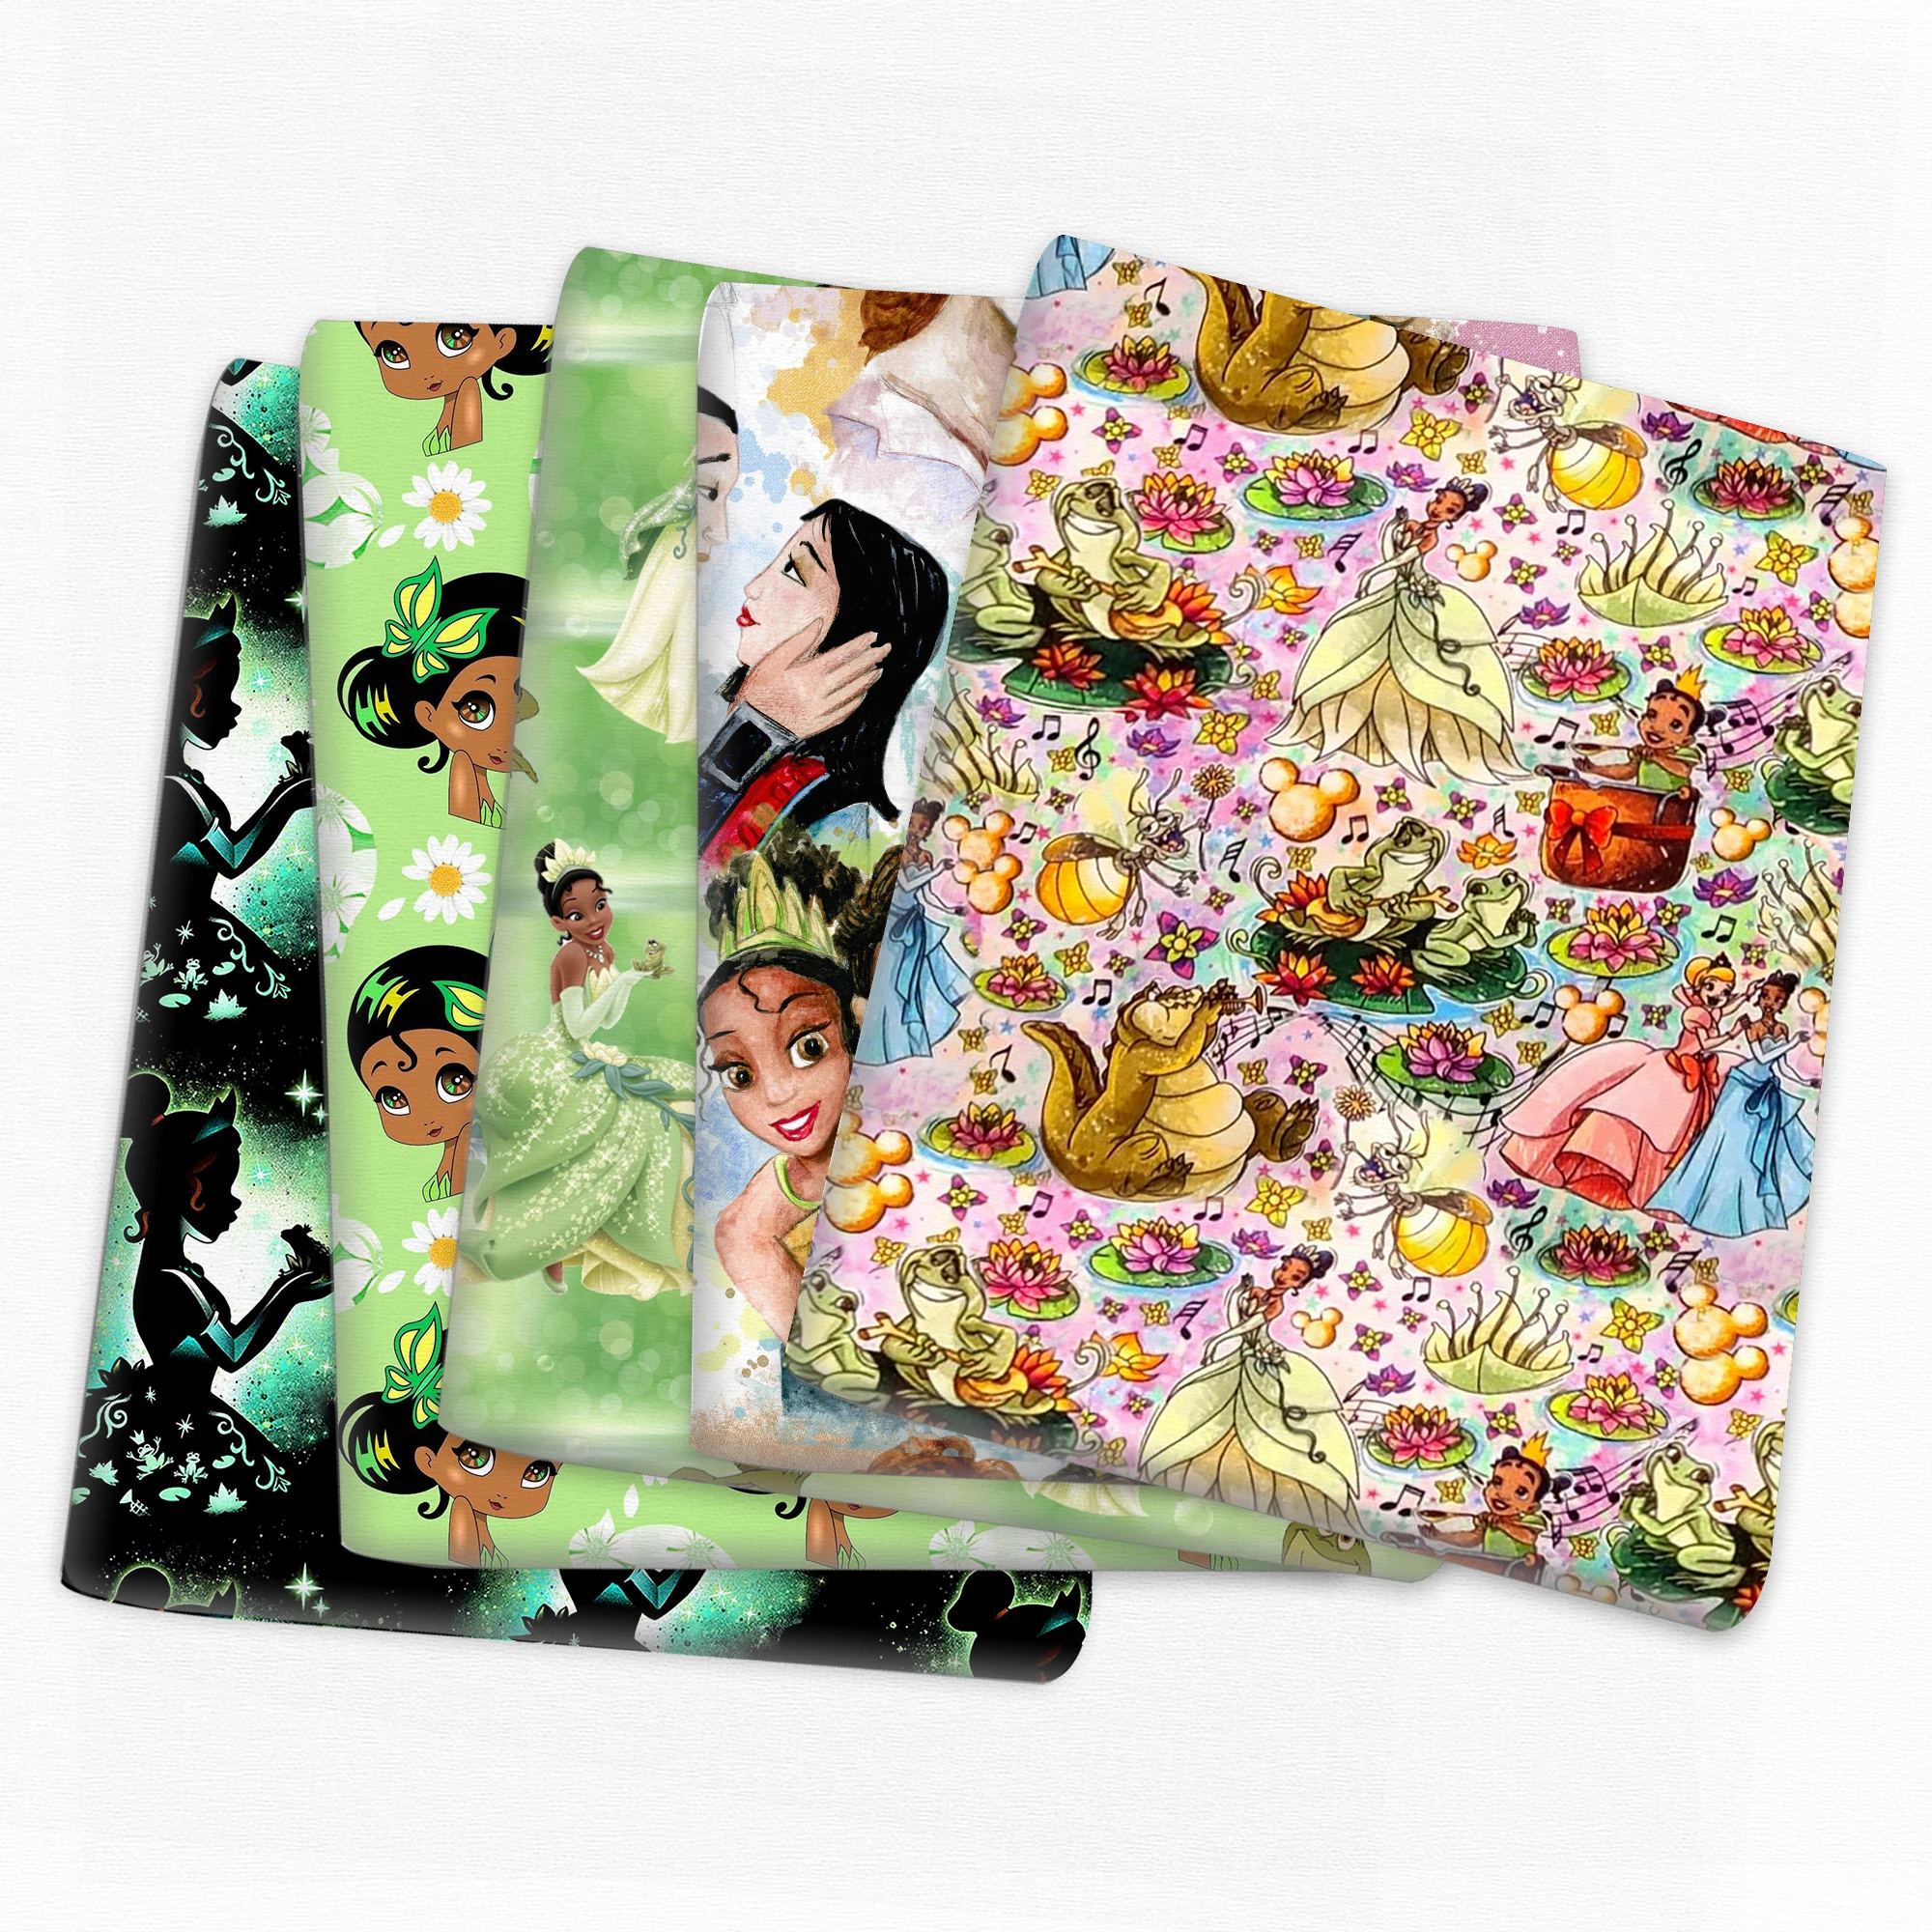 Disney Princess Tiana 50*145cm Polyester Cotton Fabric Sewing Quilting Fabric Needlework Material DIY Handmade